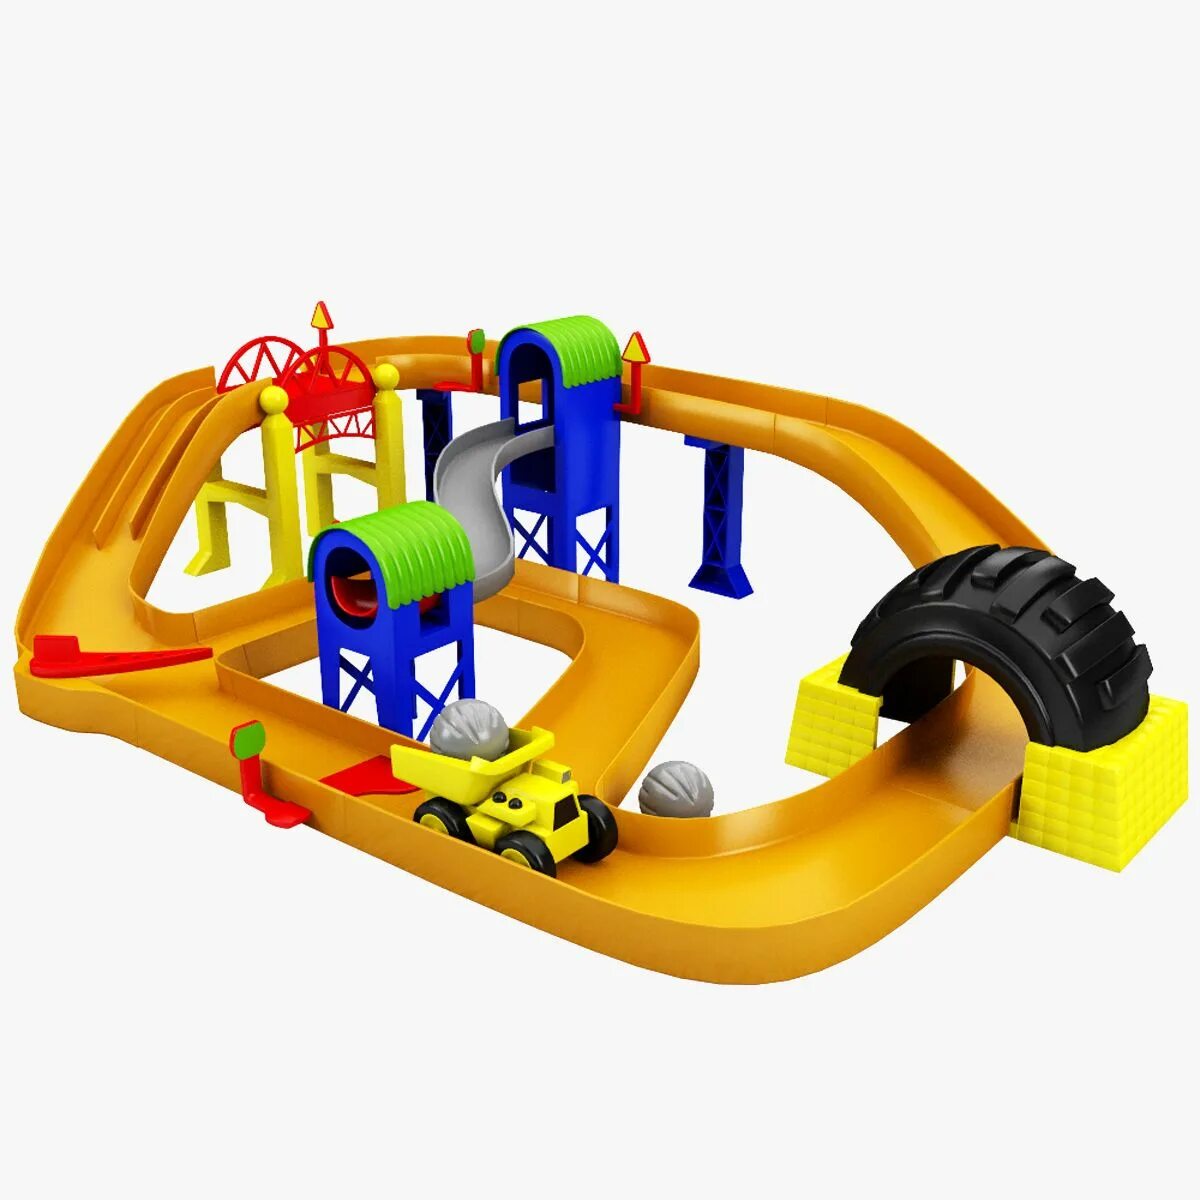 Track Racing Max игрушка. Race Toy time зоопарк. Игрушка Racing track для детей с 6 лет. Фирмы Hongzhan. Race Toy time лодка. Max tracks